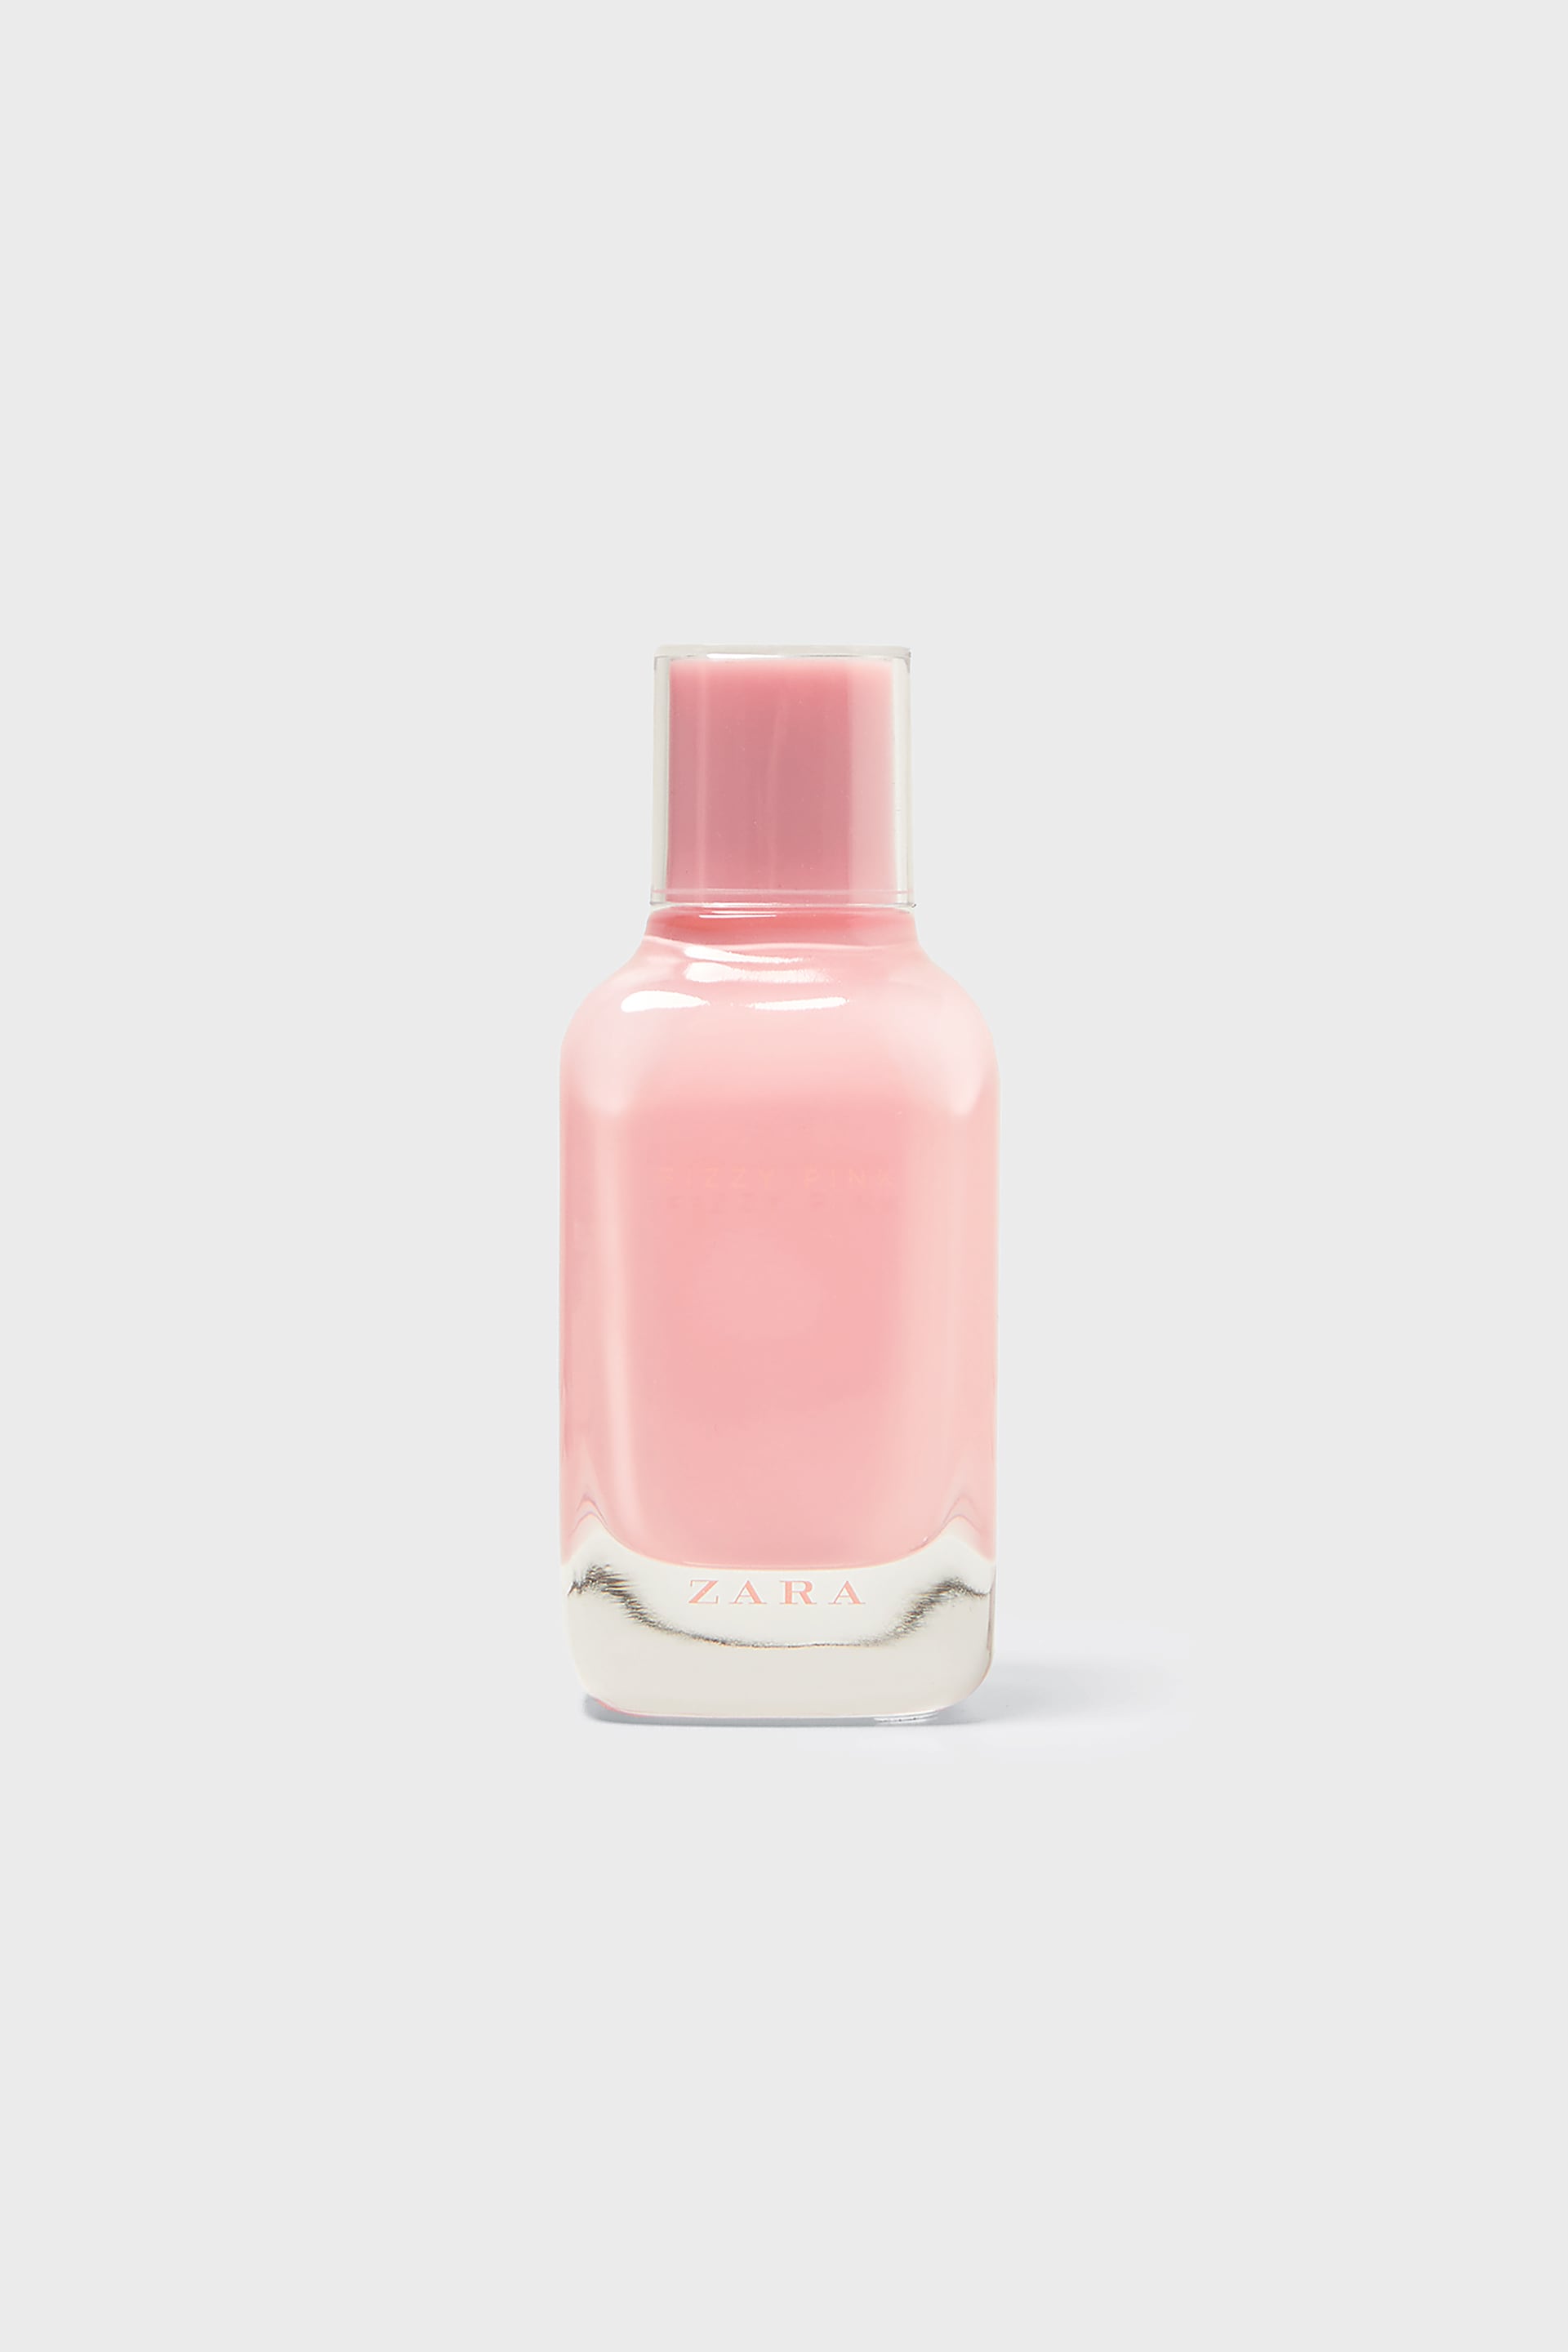 zara pink bottle perfume